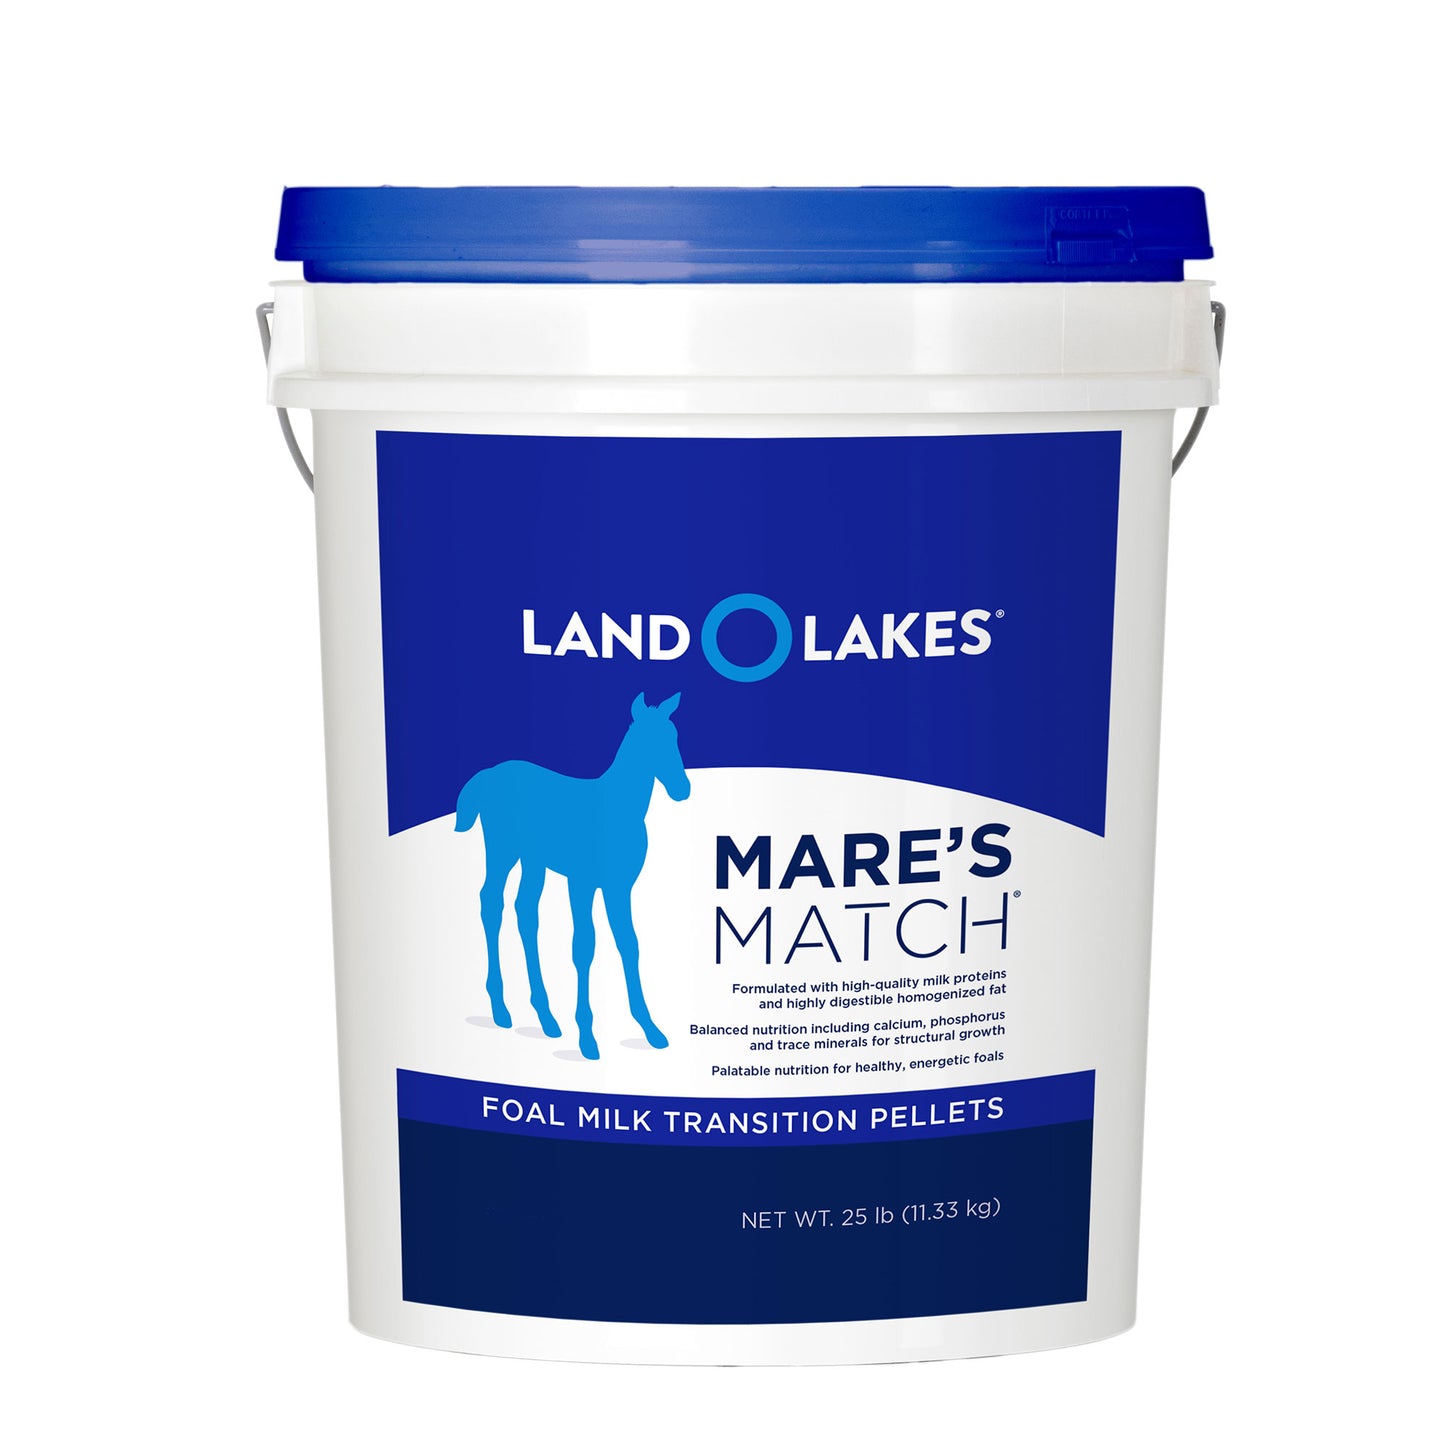 LAND O LAKES Mare's Match Foal Milk Transition Pellets 25 Pound pail